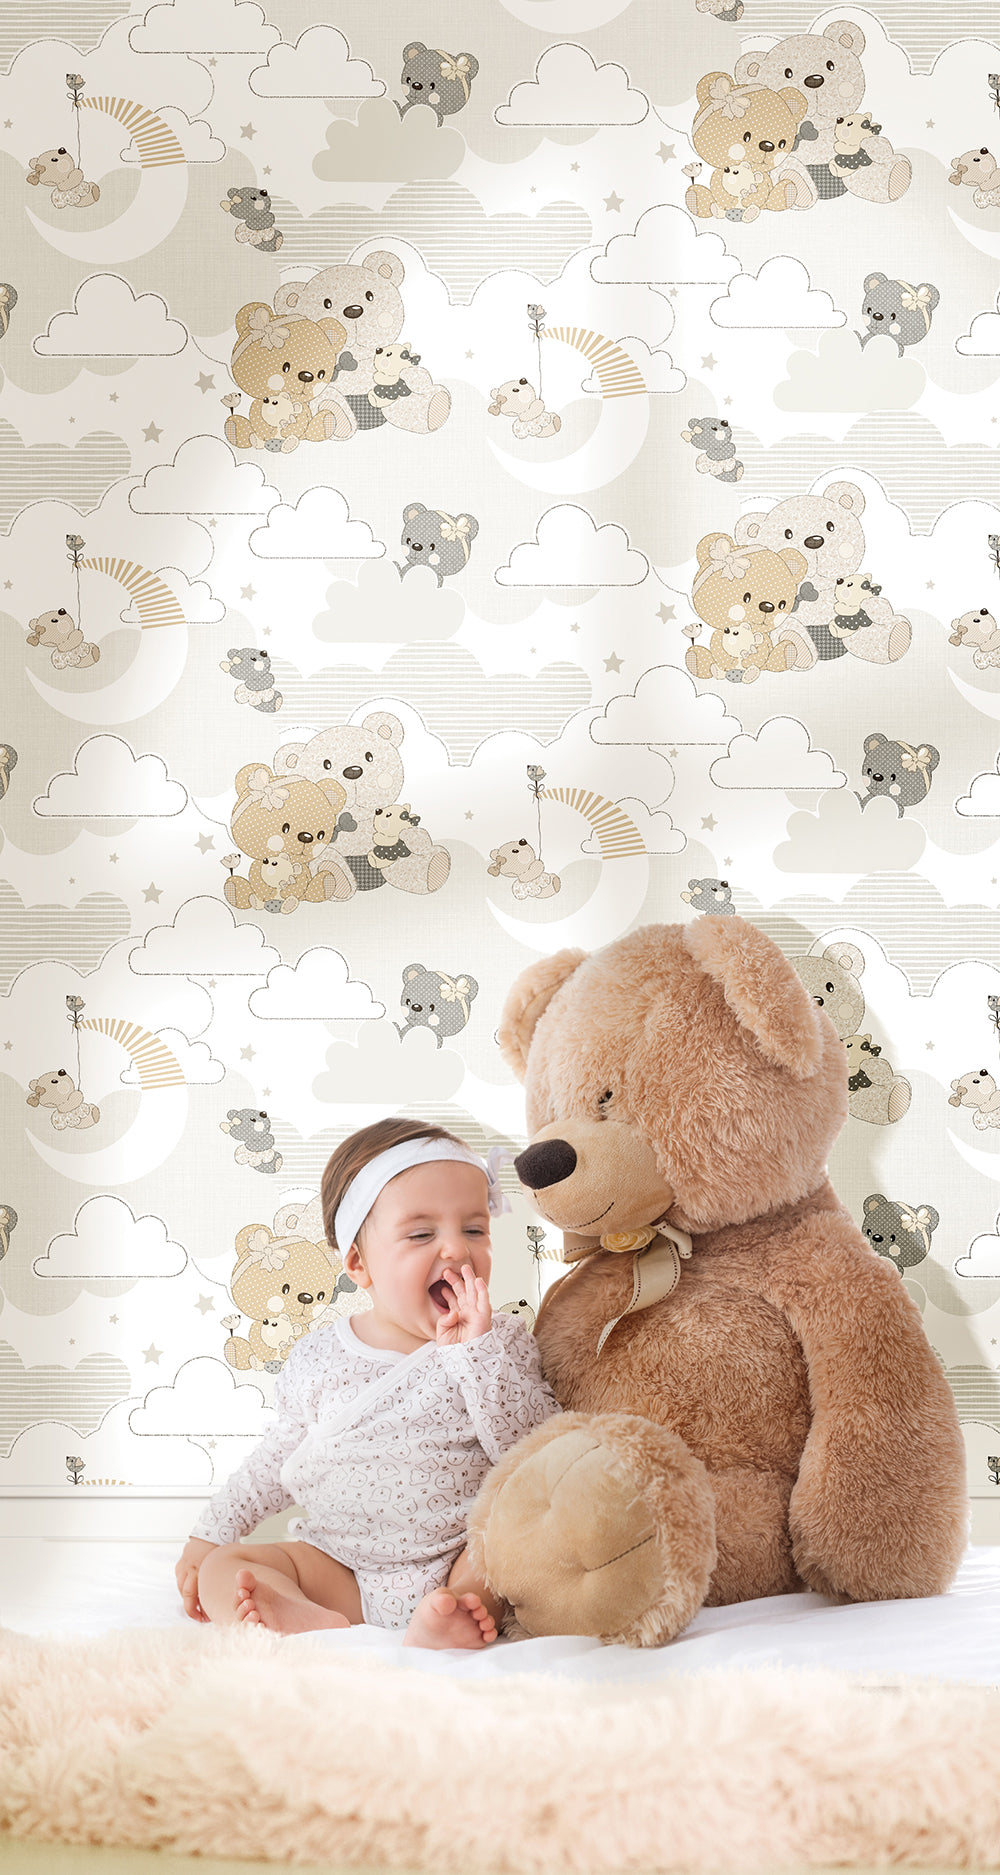 Mondo Baby - Cute Teddy Bears kids wallpaper Parato    